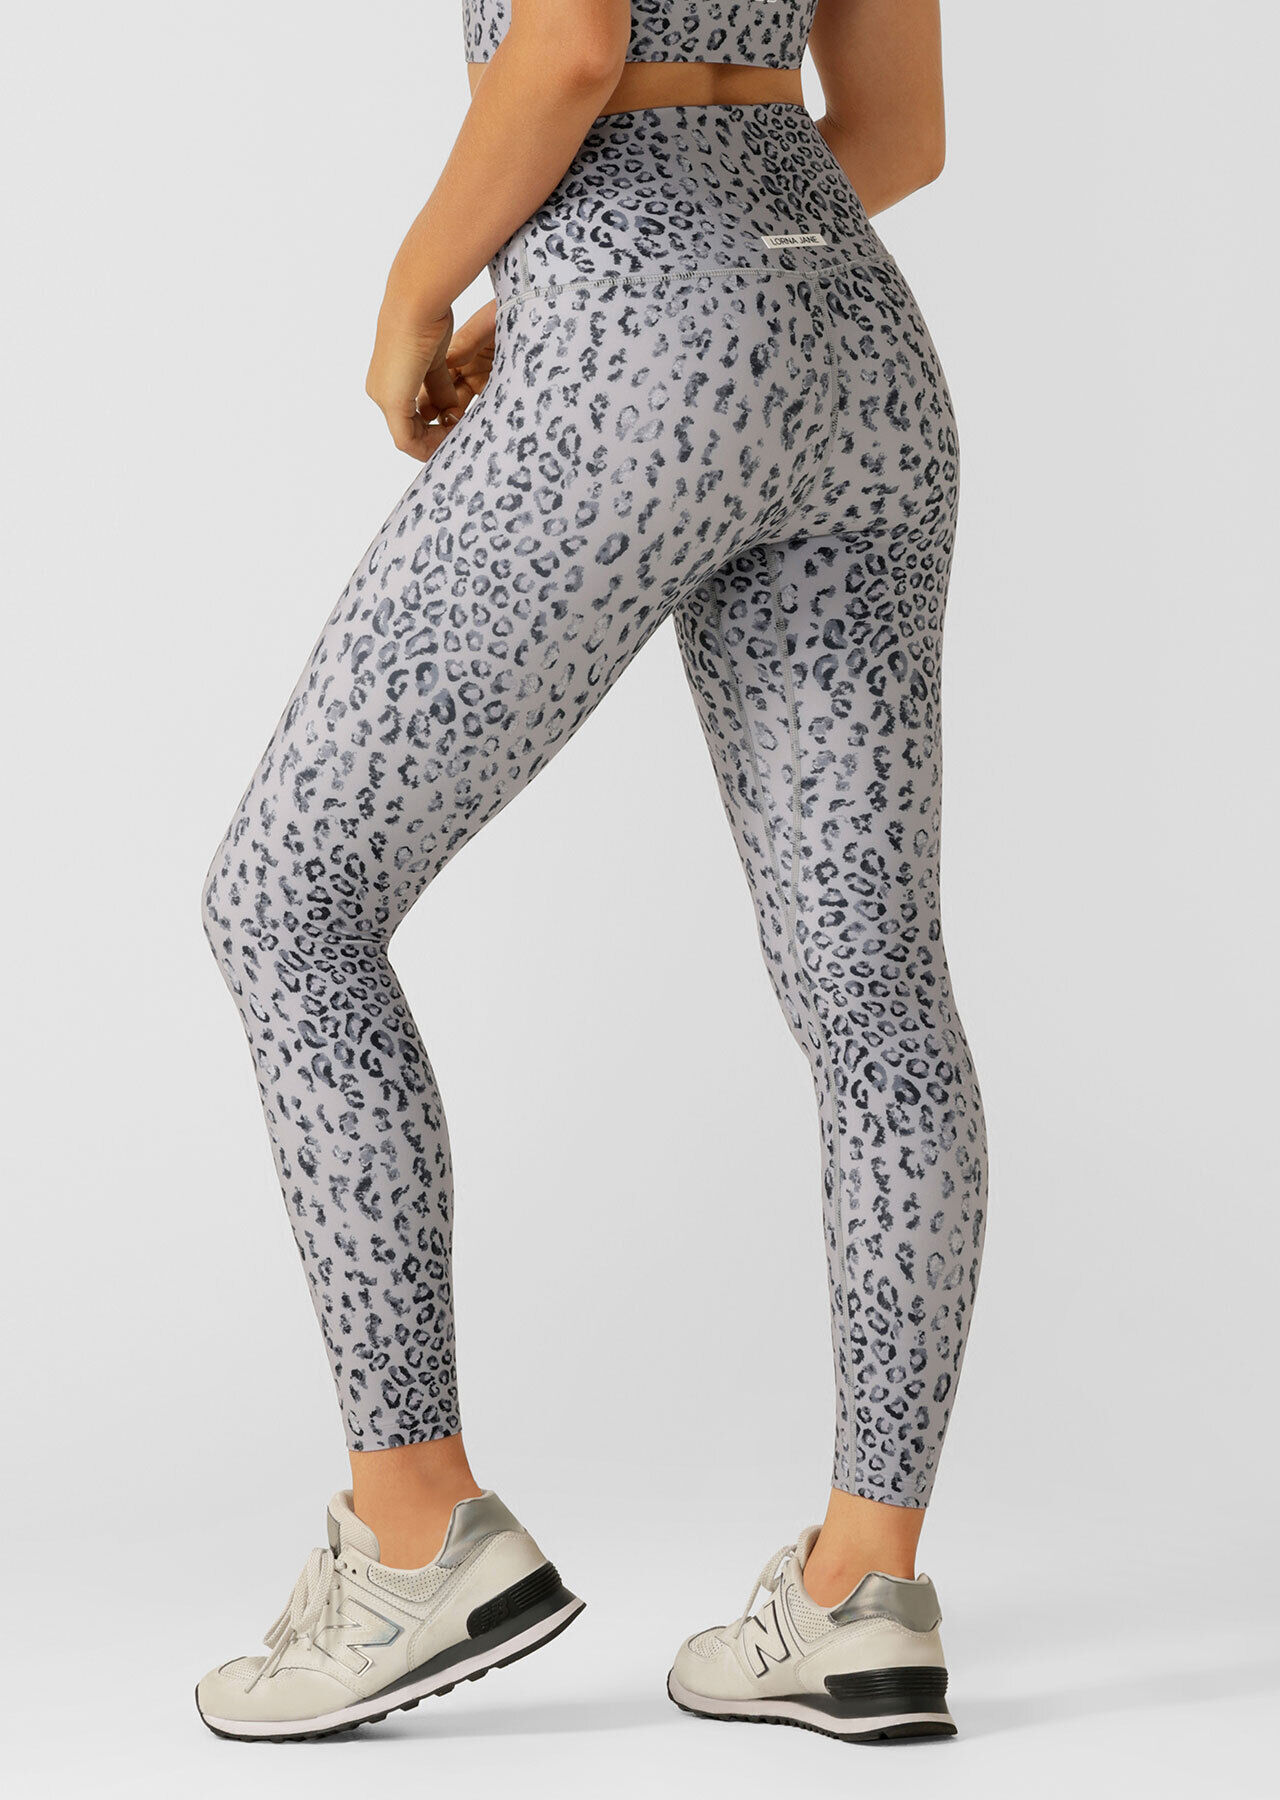 OMG! panda Lucy Black & White Animal Print Leggings Yoga Pants - Women -  Pineapple Clothing